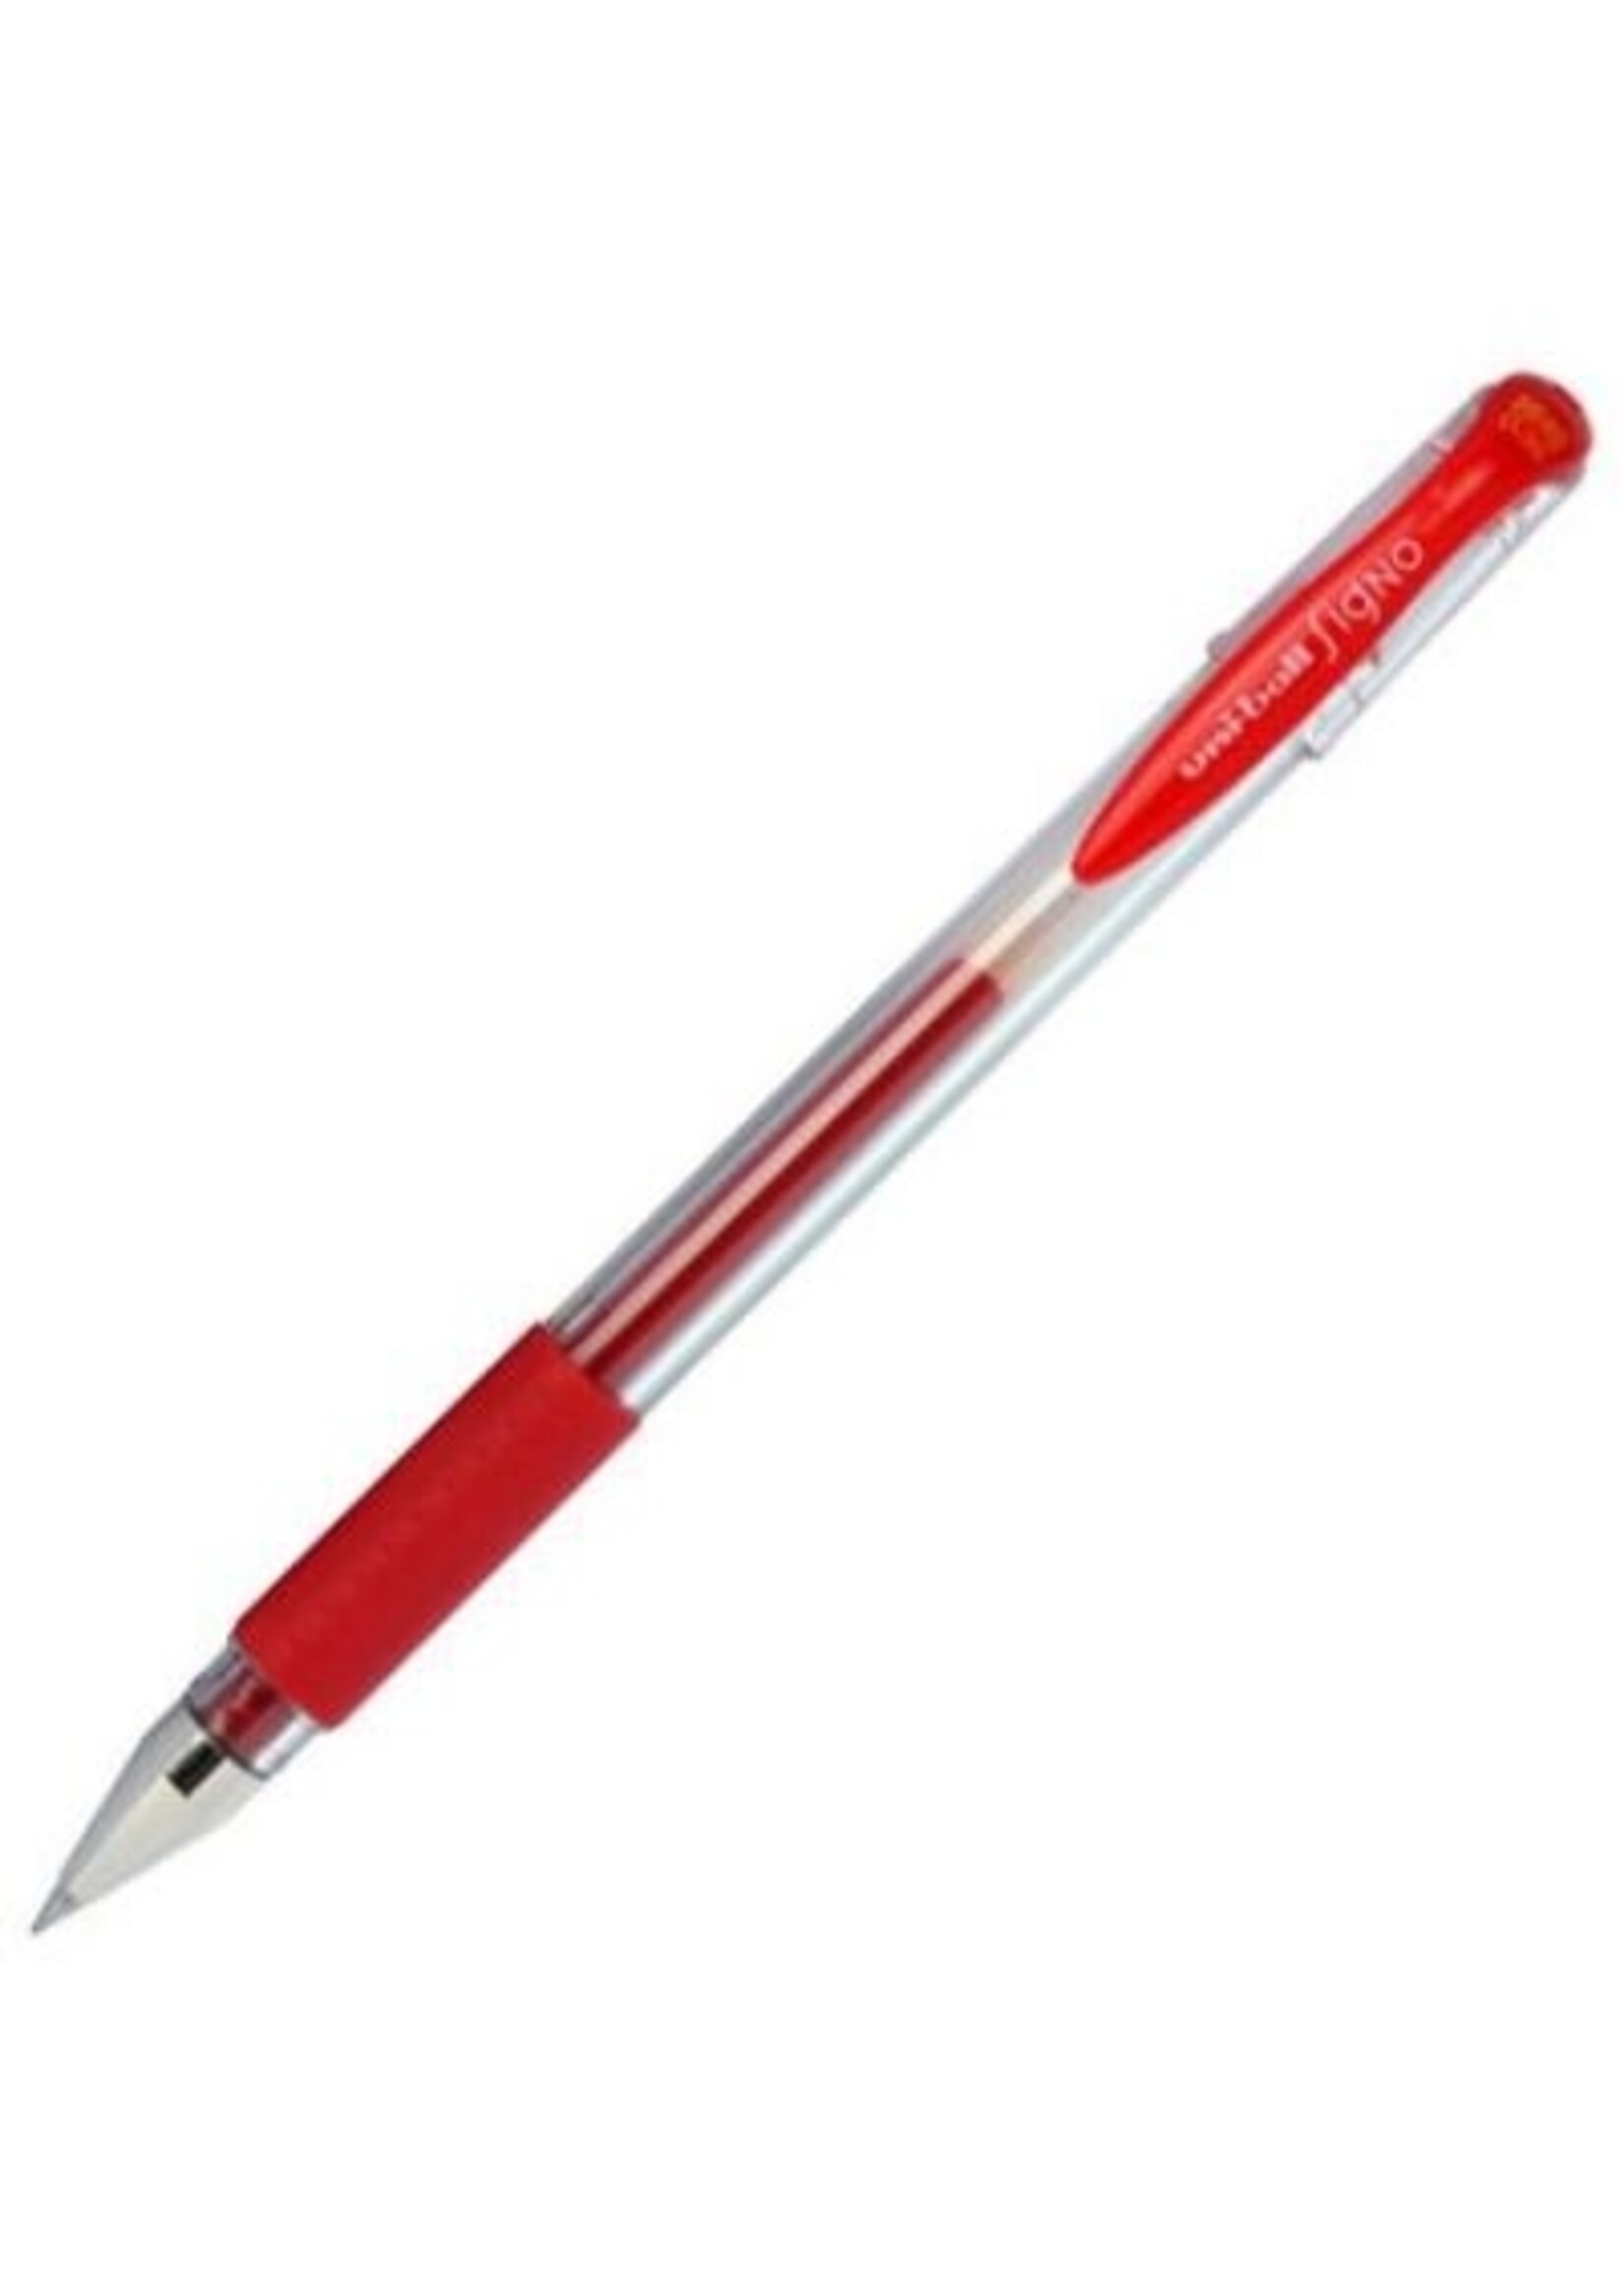 Uni Ball Gelstick Pen, Metallic Red